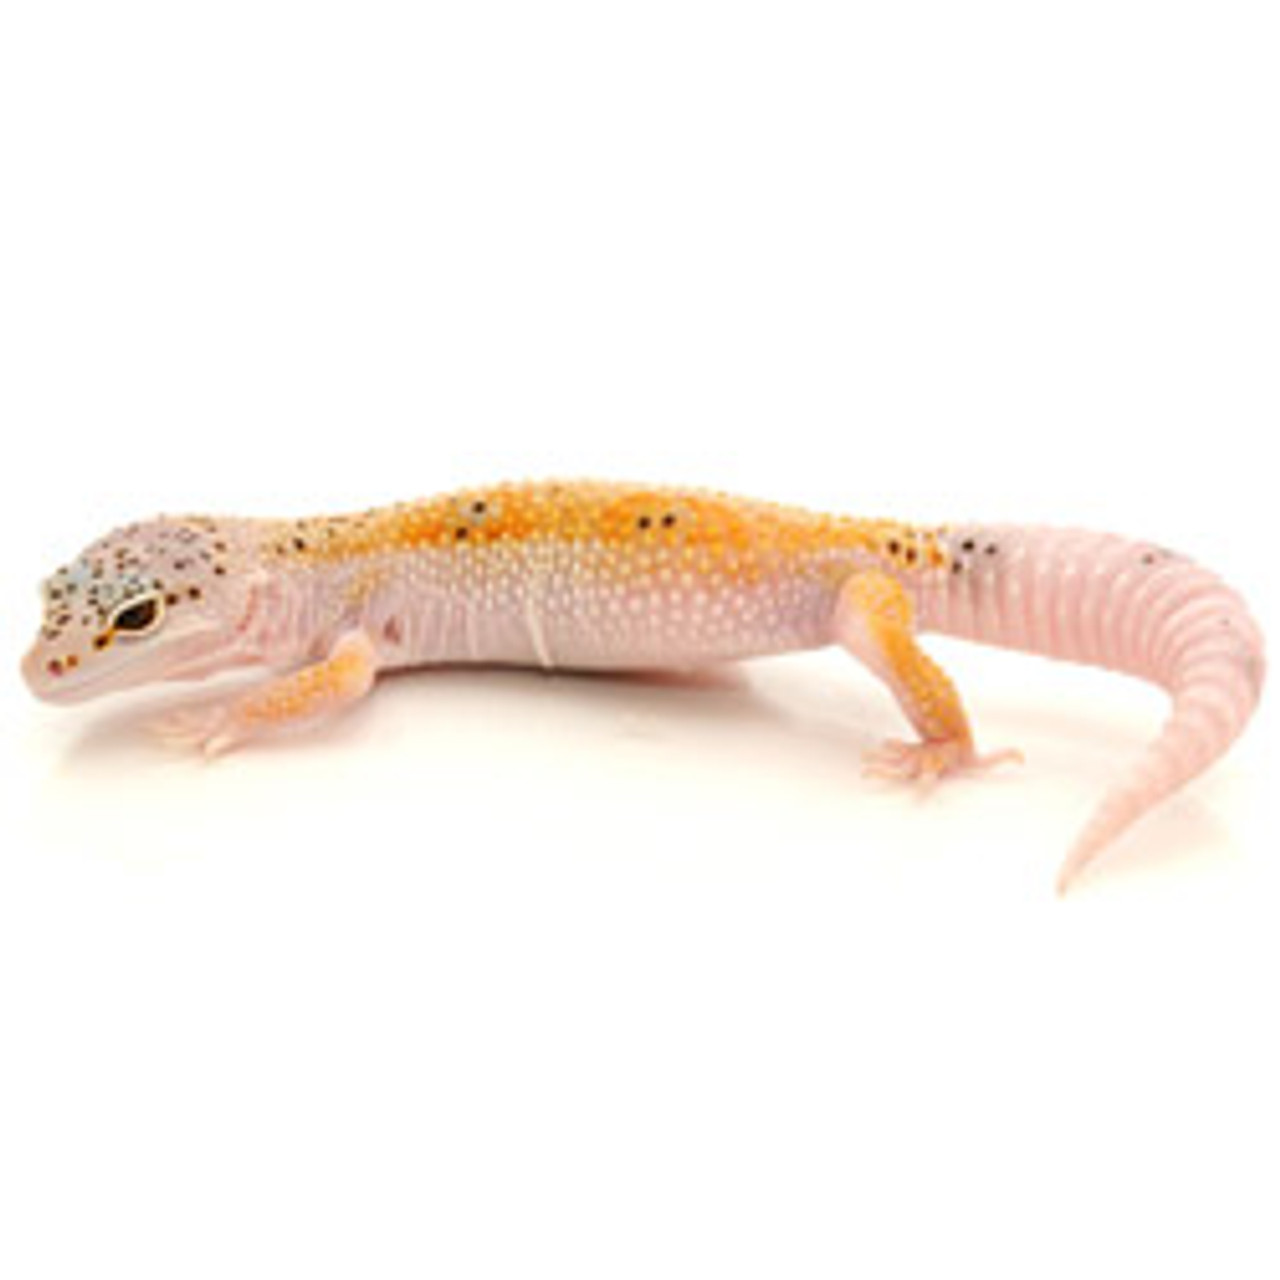 Enigma Leopard Gecko (Eublepharis macularius) Adult